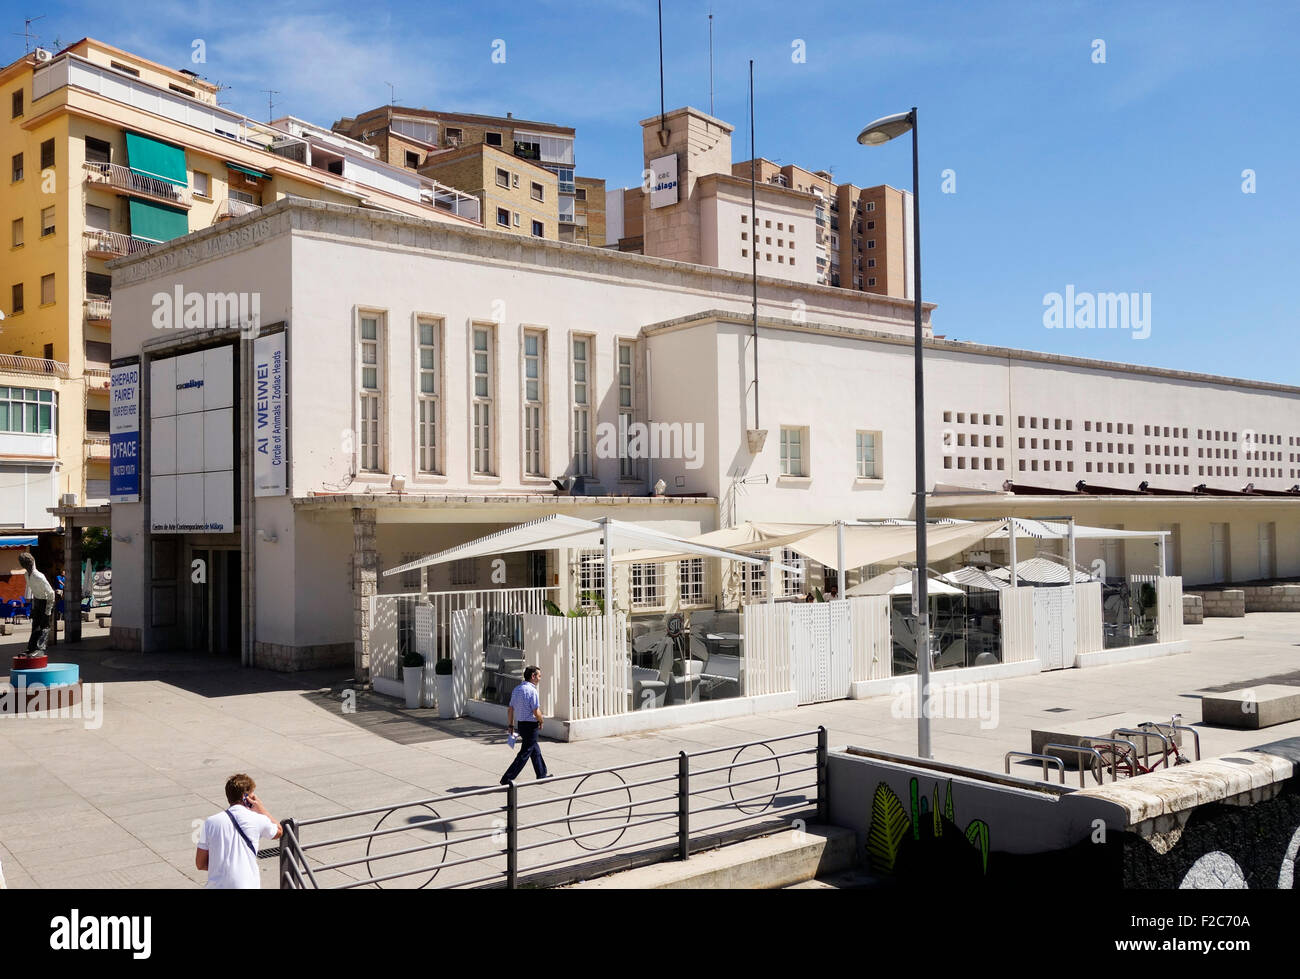 The Malaga museum of contemporary art,, centro de arte contemporáneo. with Oleo restaurant in front, soho district, CAC Malaga. Spain. Stock Photo